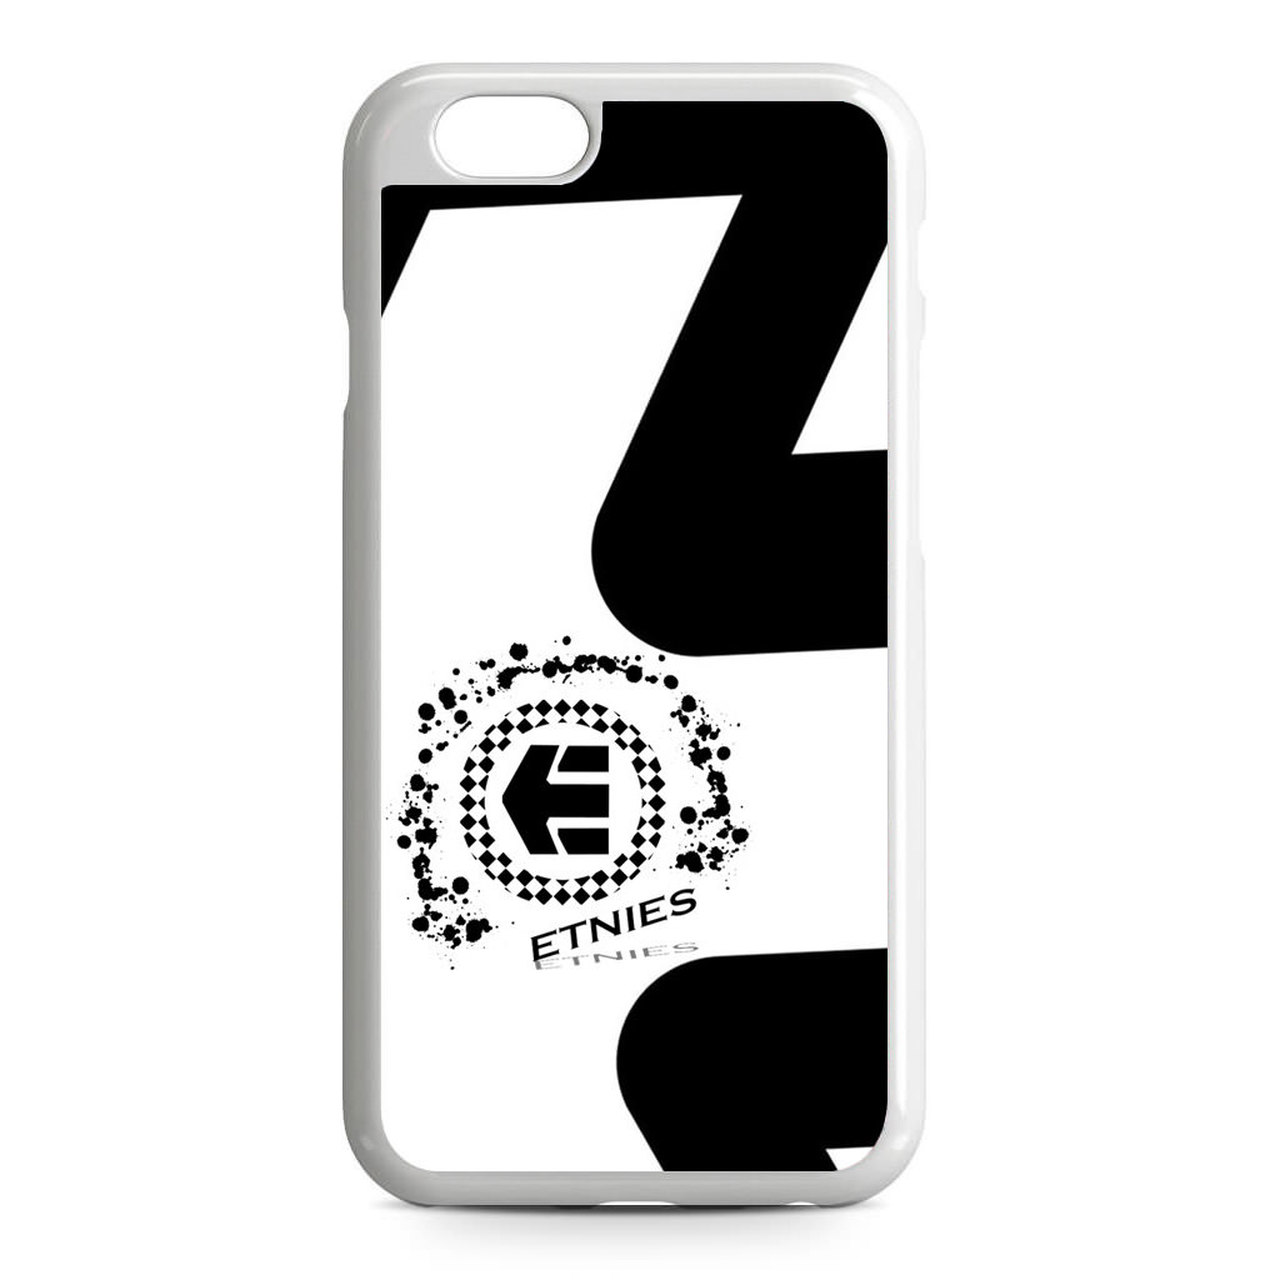 Etnies Logo iPhone 6/6S Case.